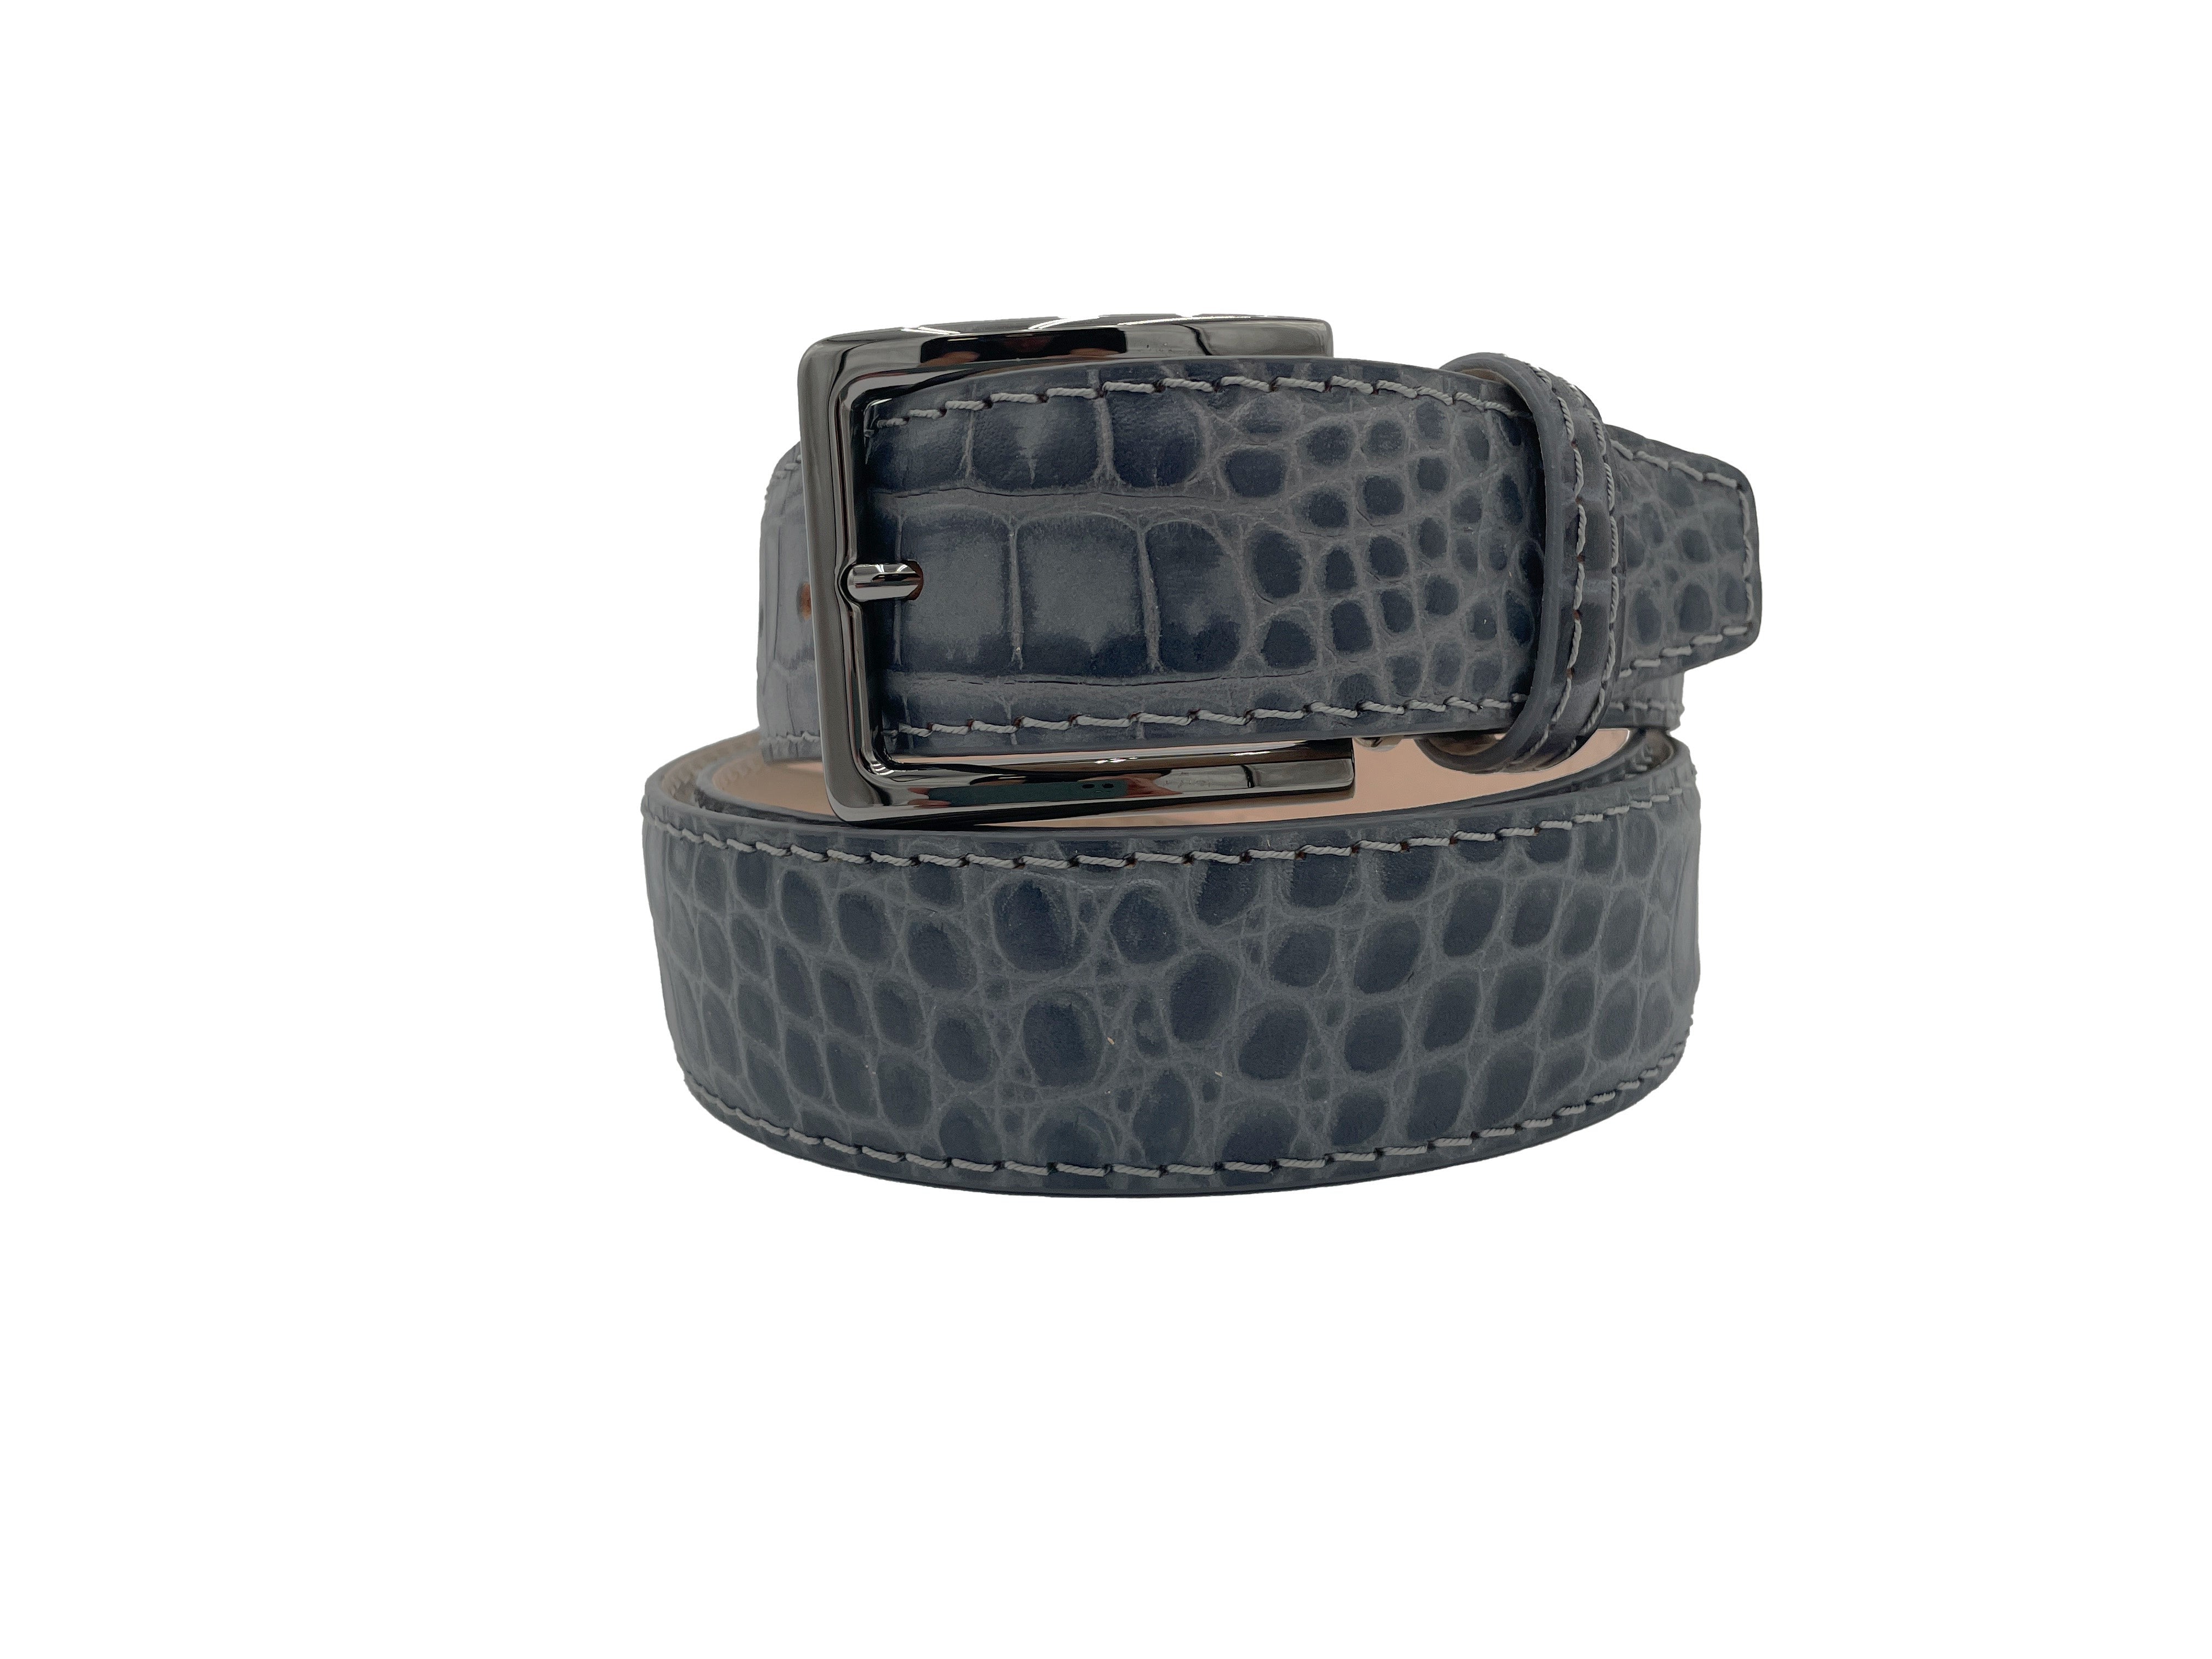 Gray/Black Genuine Double Side Alligator Crocodile Leather Belt